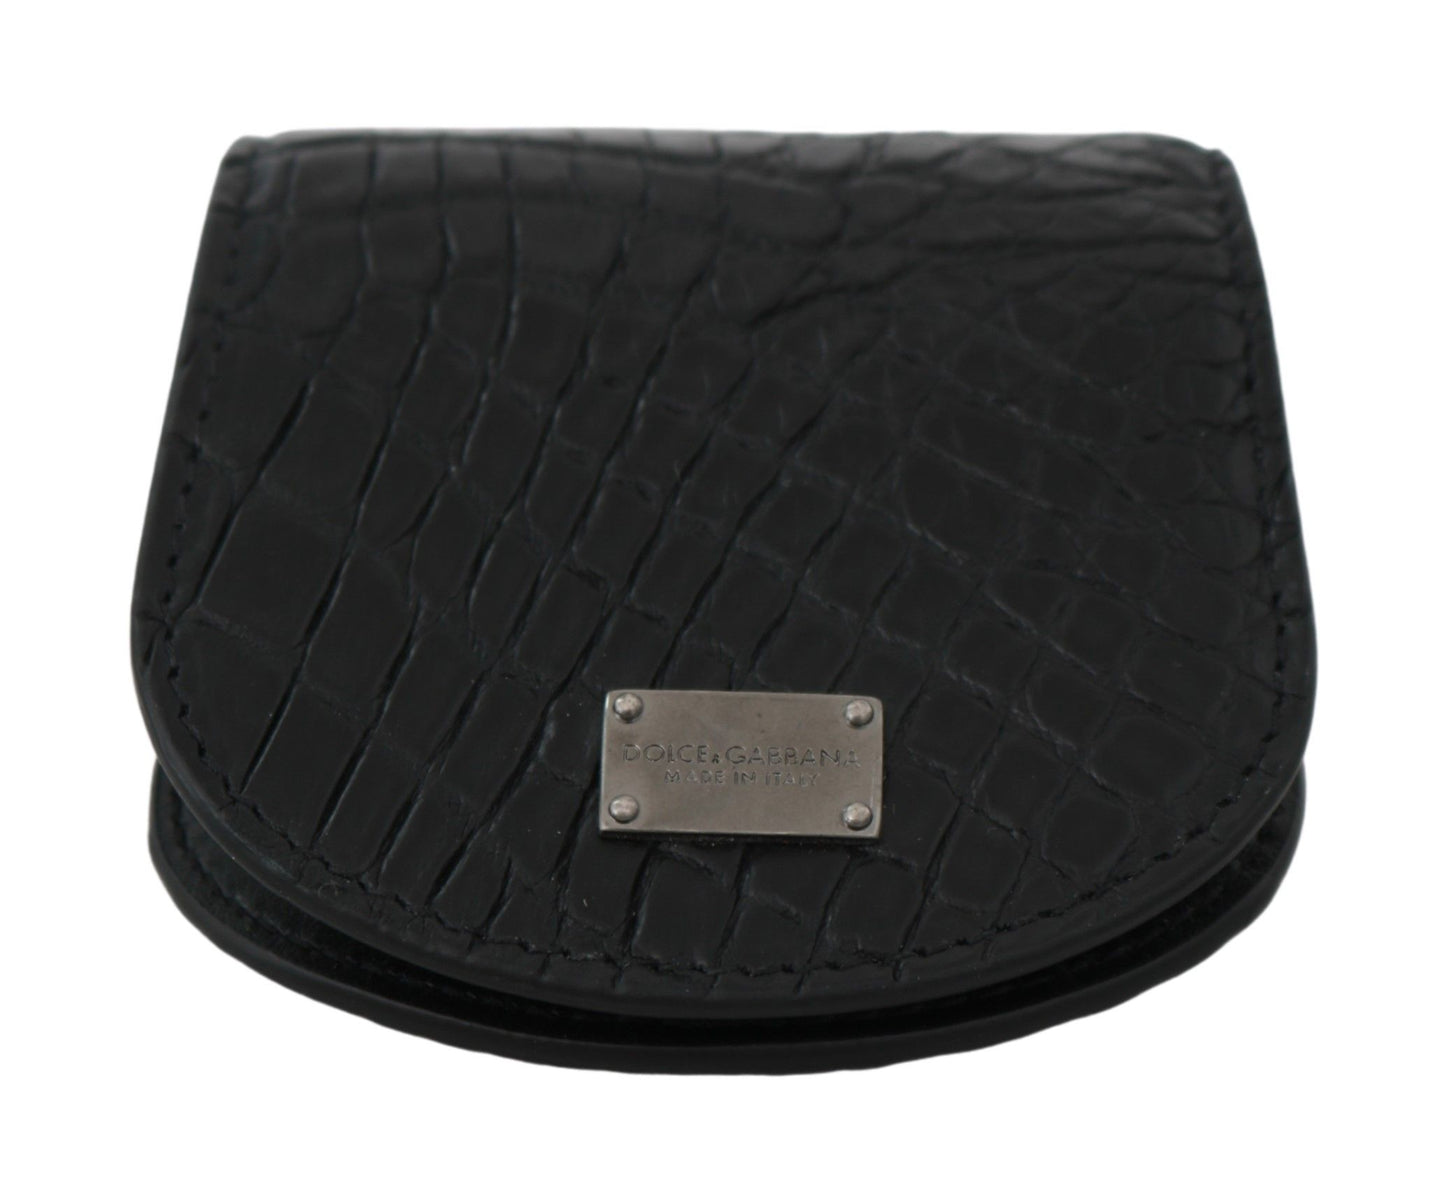 Dolce & Gabbana Sleek Black Leather Coin Case Wallet